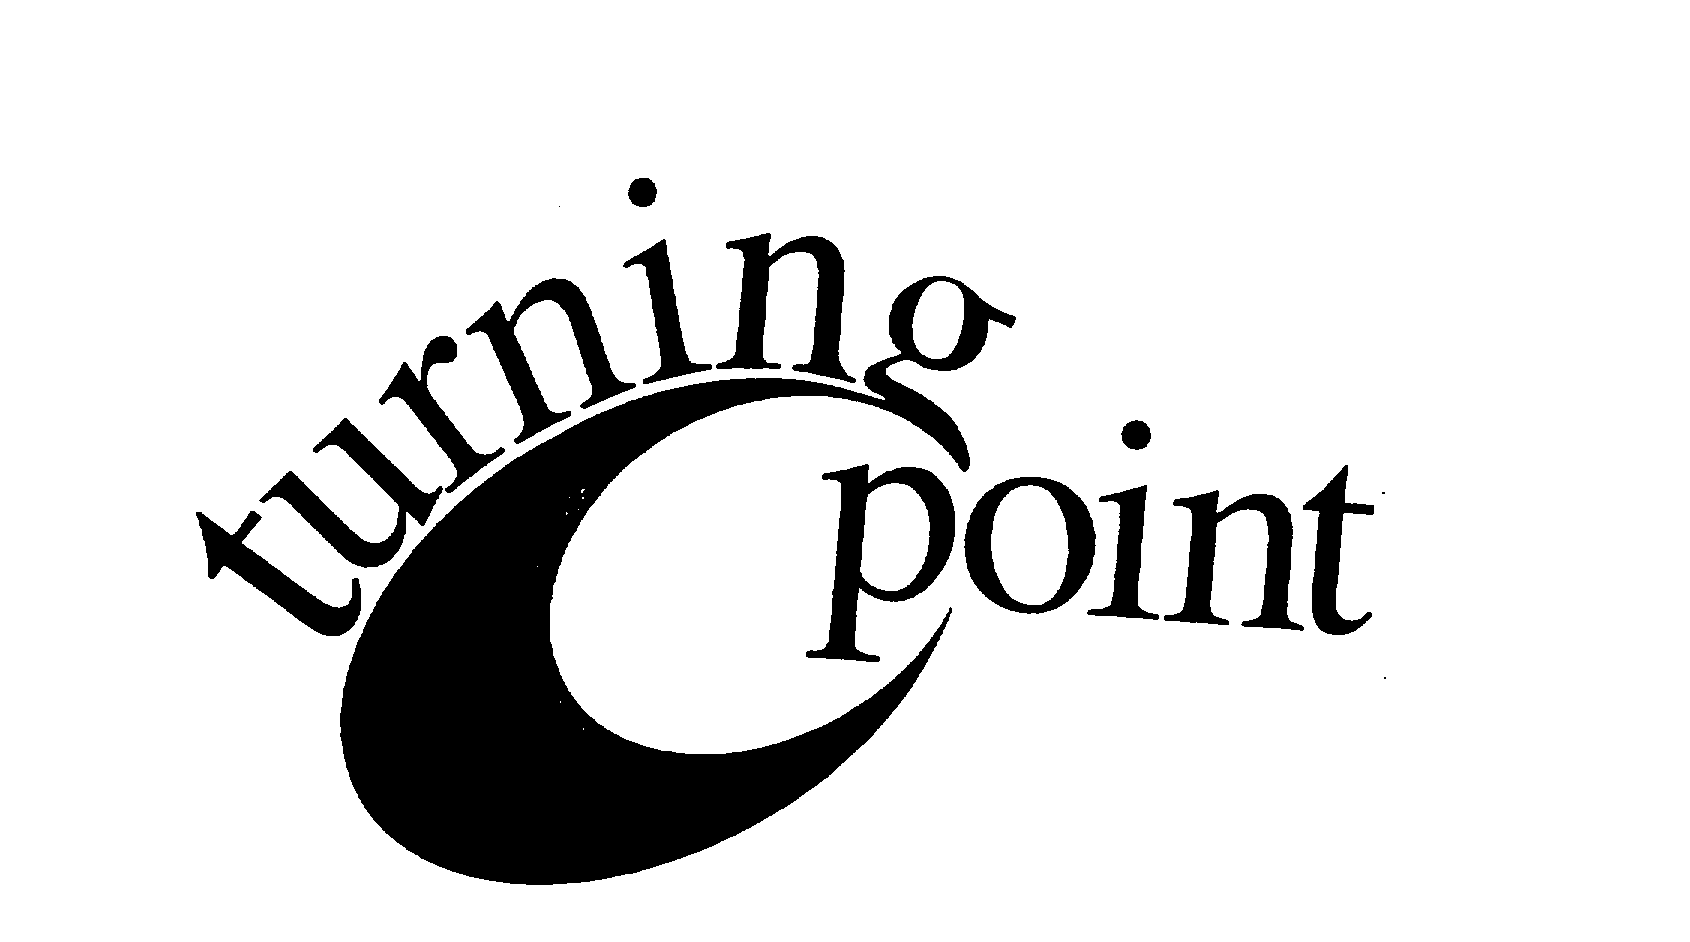 Trademark Logo TURNING POINT